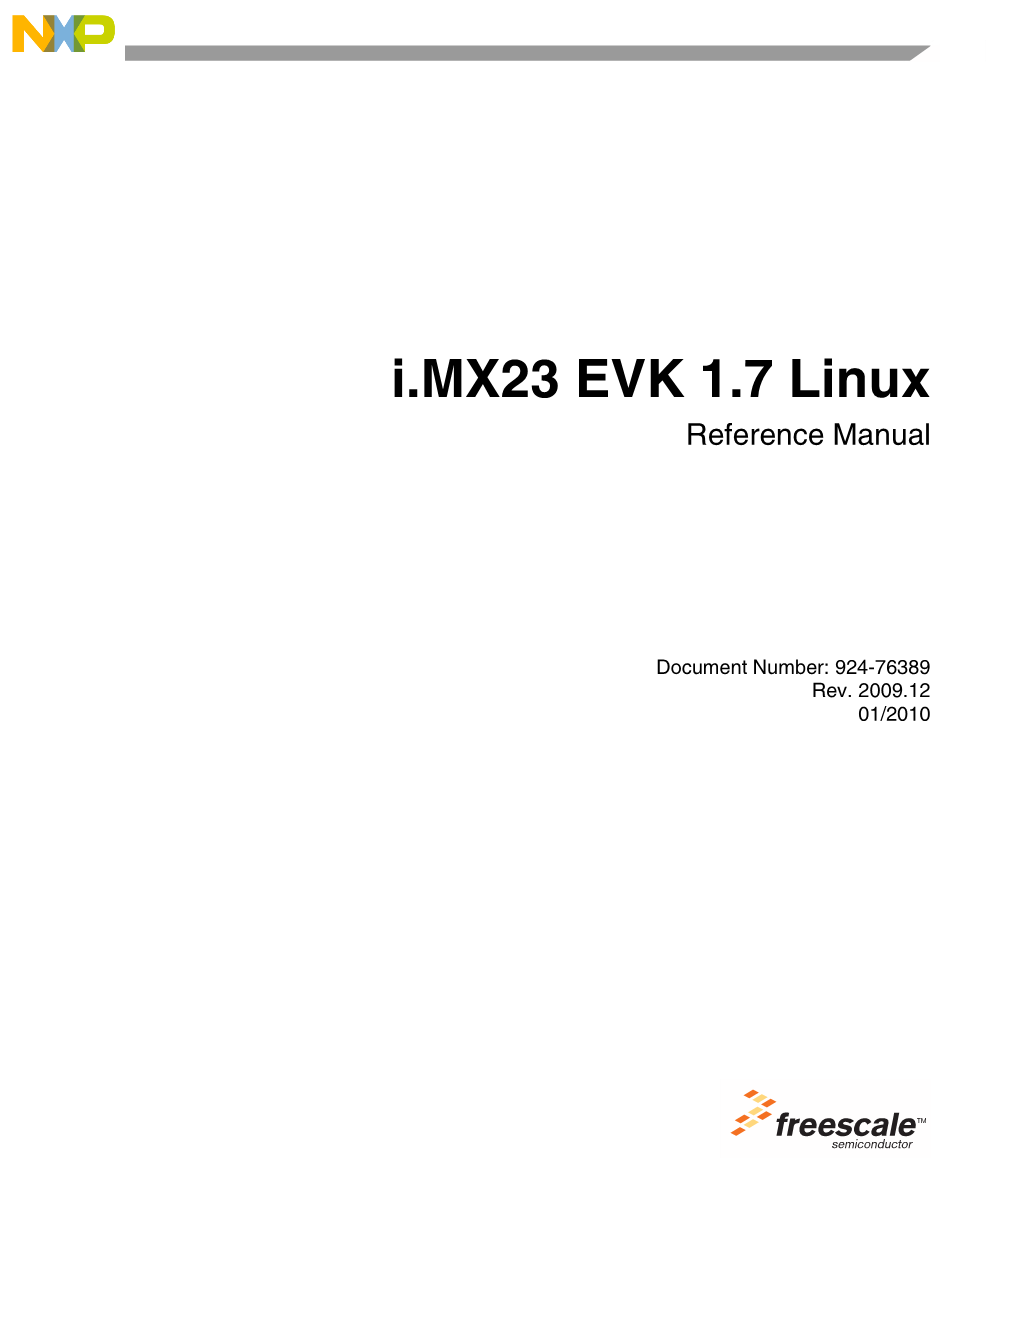 I.MX23 EVK 1.7 Linux Reference Manual